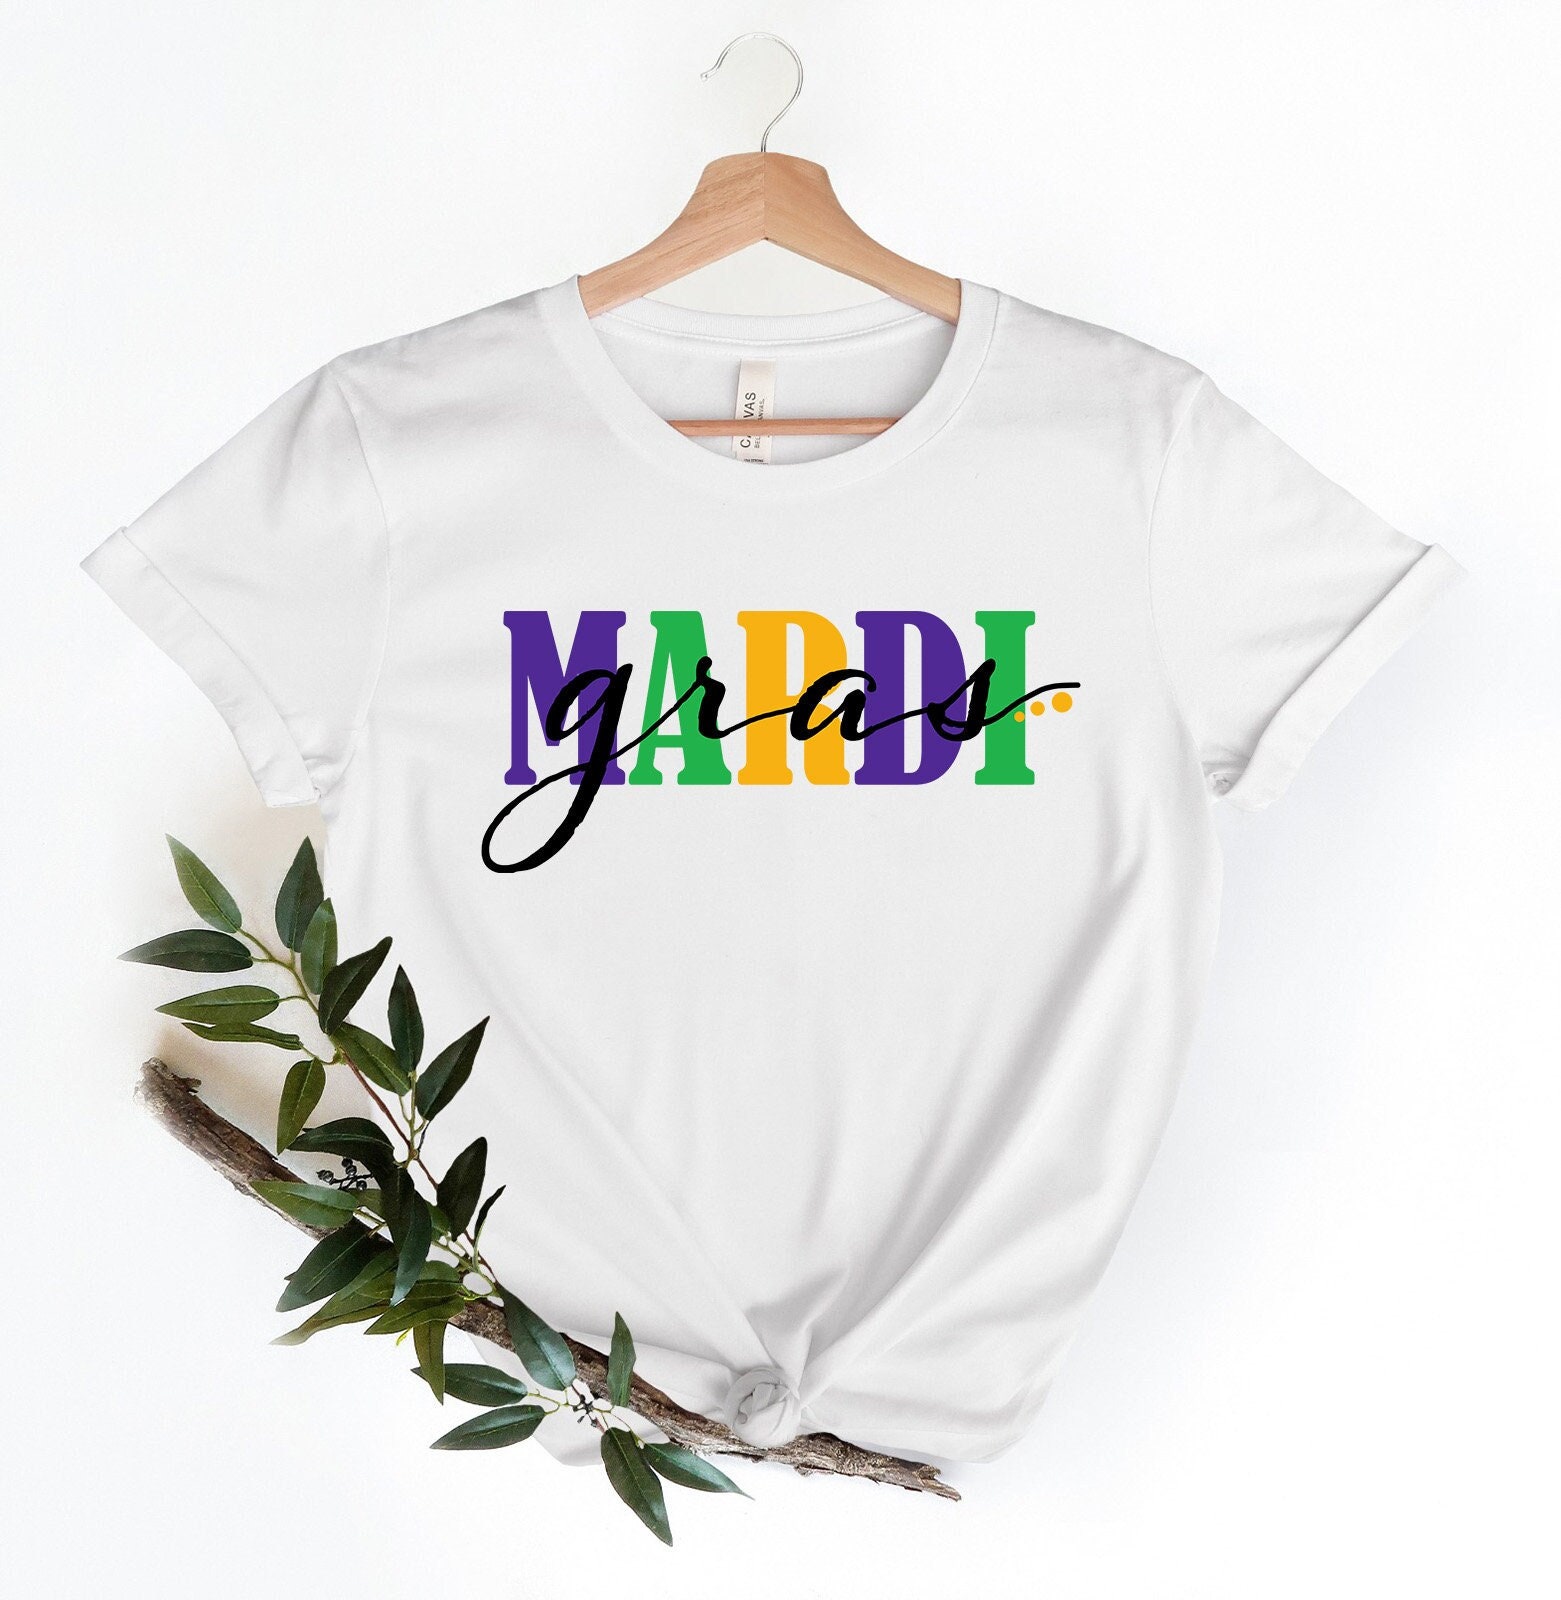 Discover Mardi Gras T-shirt, Mardi Gras Shirt, Happy Mardi Gras, Cute Mardi Gras Tee